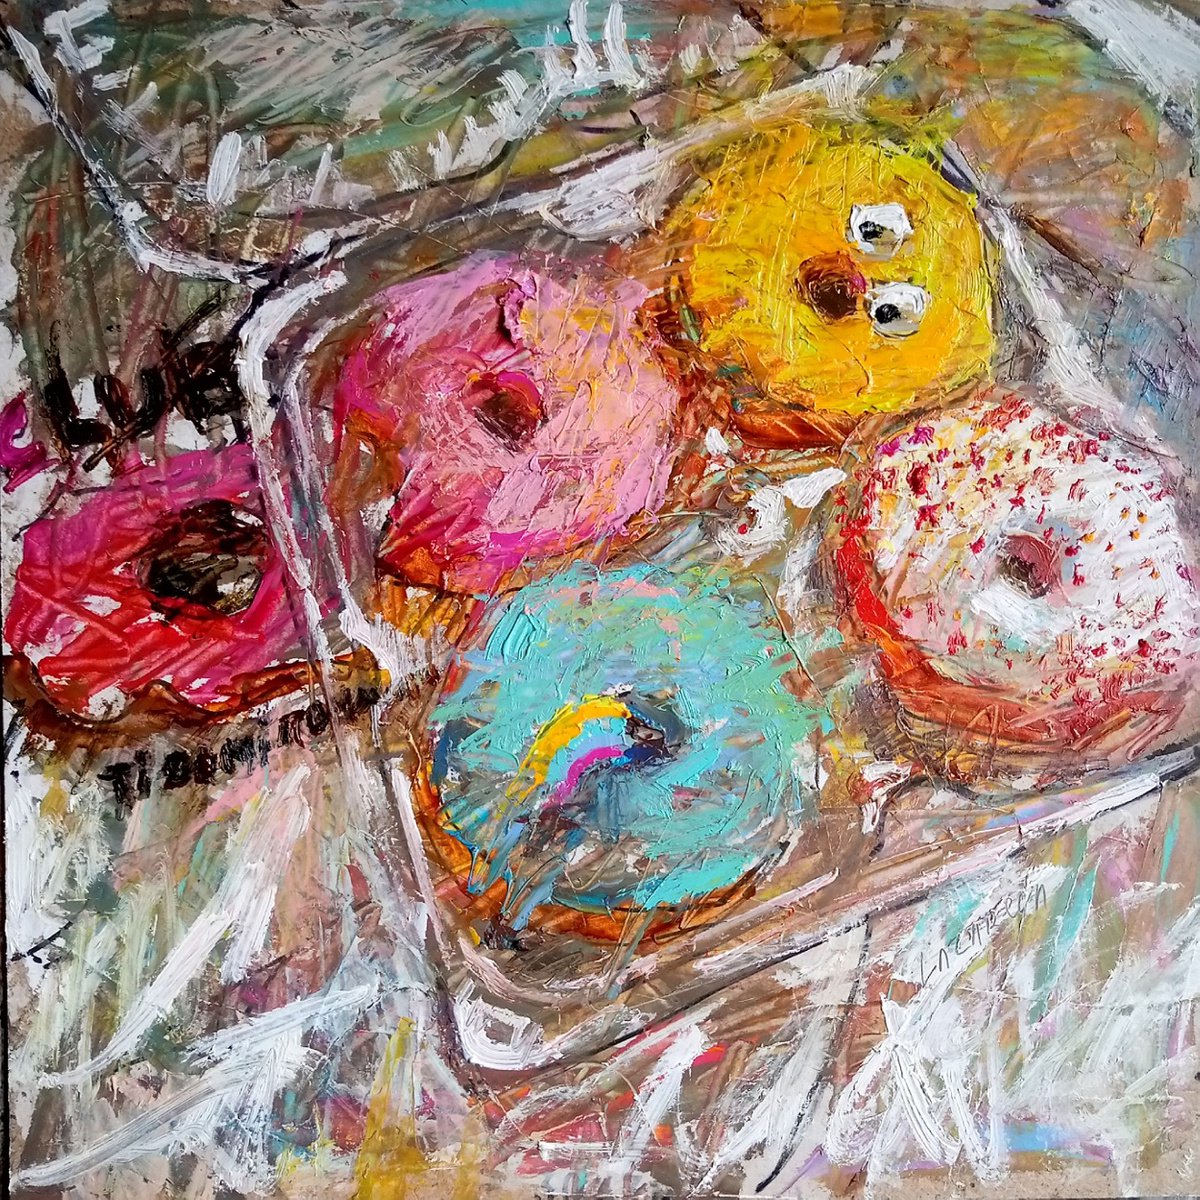 Four Donuts #4 by Valerie Lazareva